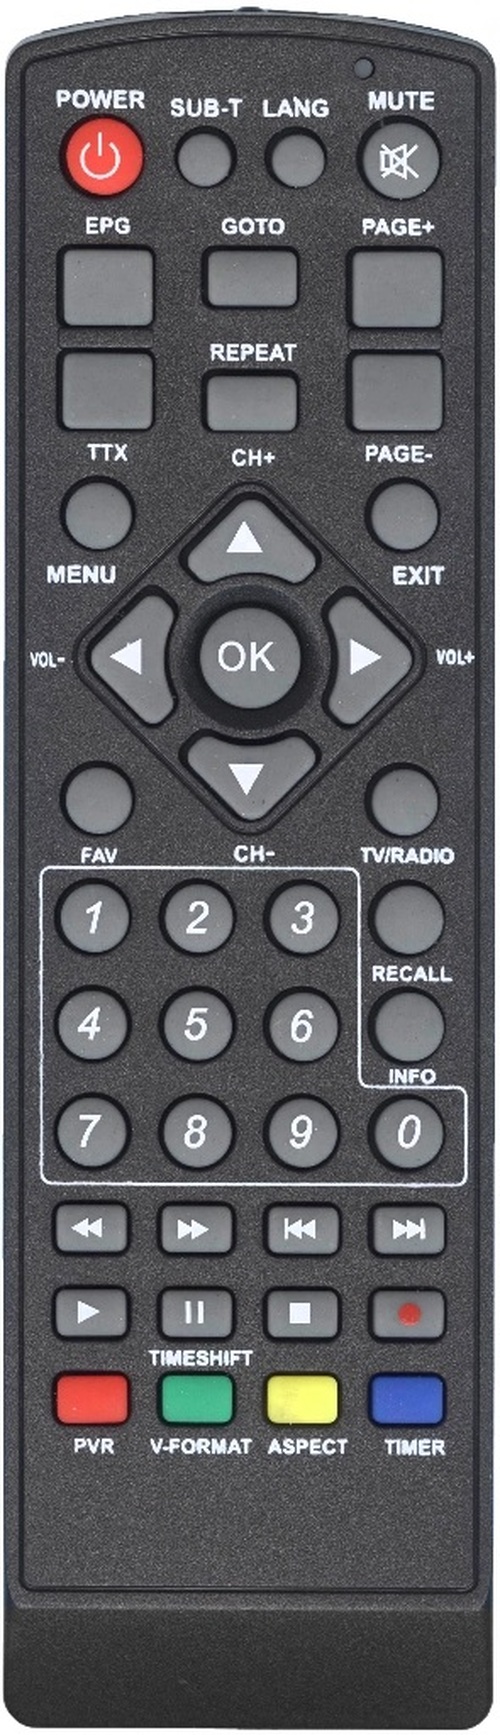 Пульт дистанционного управления для ТВ-приставки SELENGA ПДУ-3 (для моделей T71/T71D/Т80/HD850/HD920)